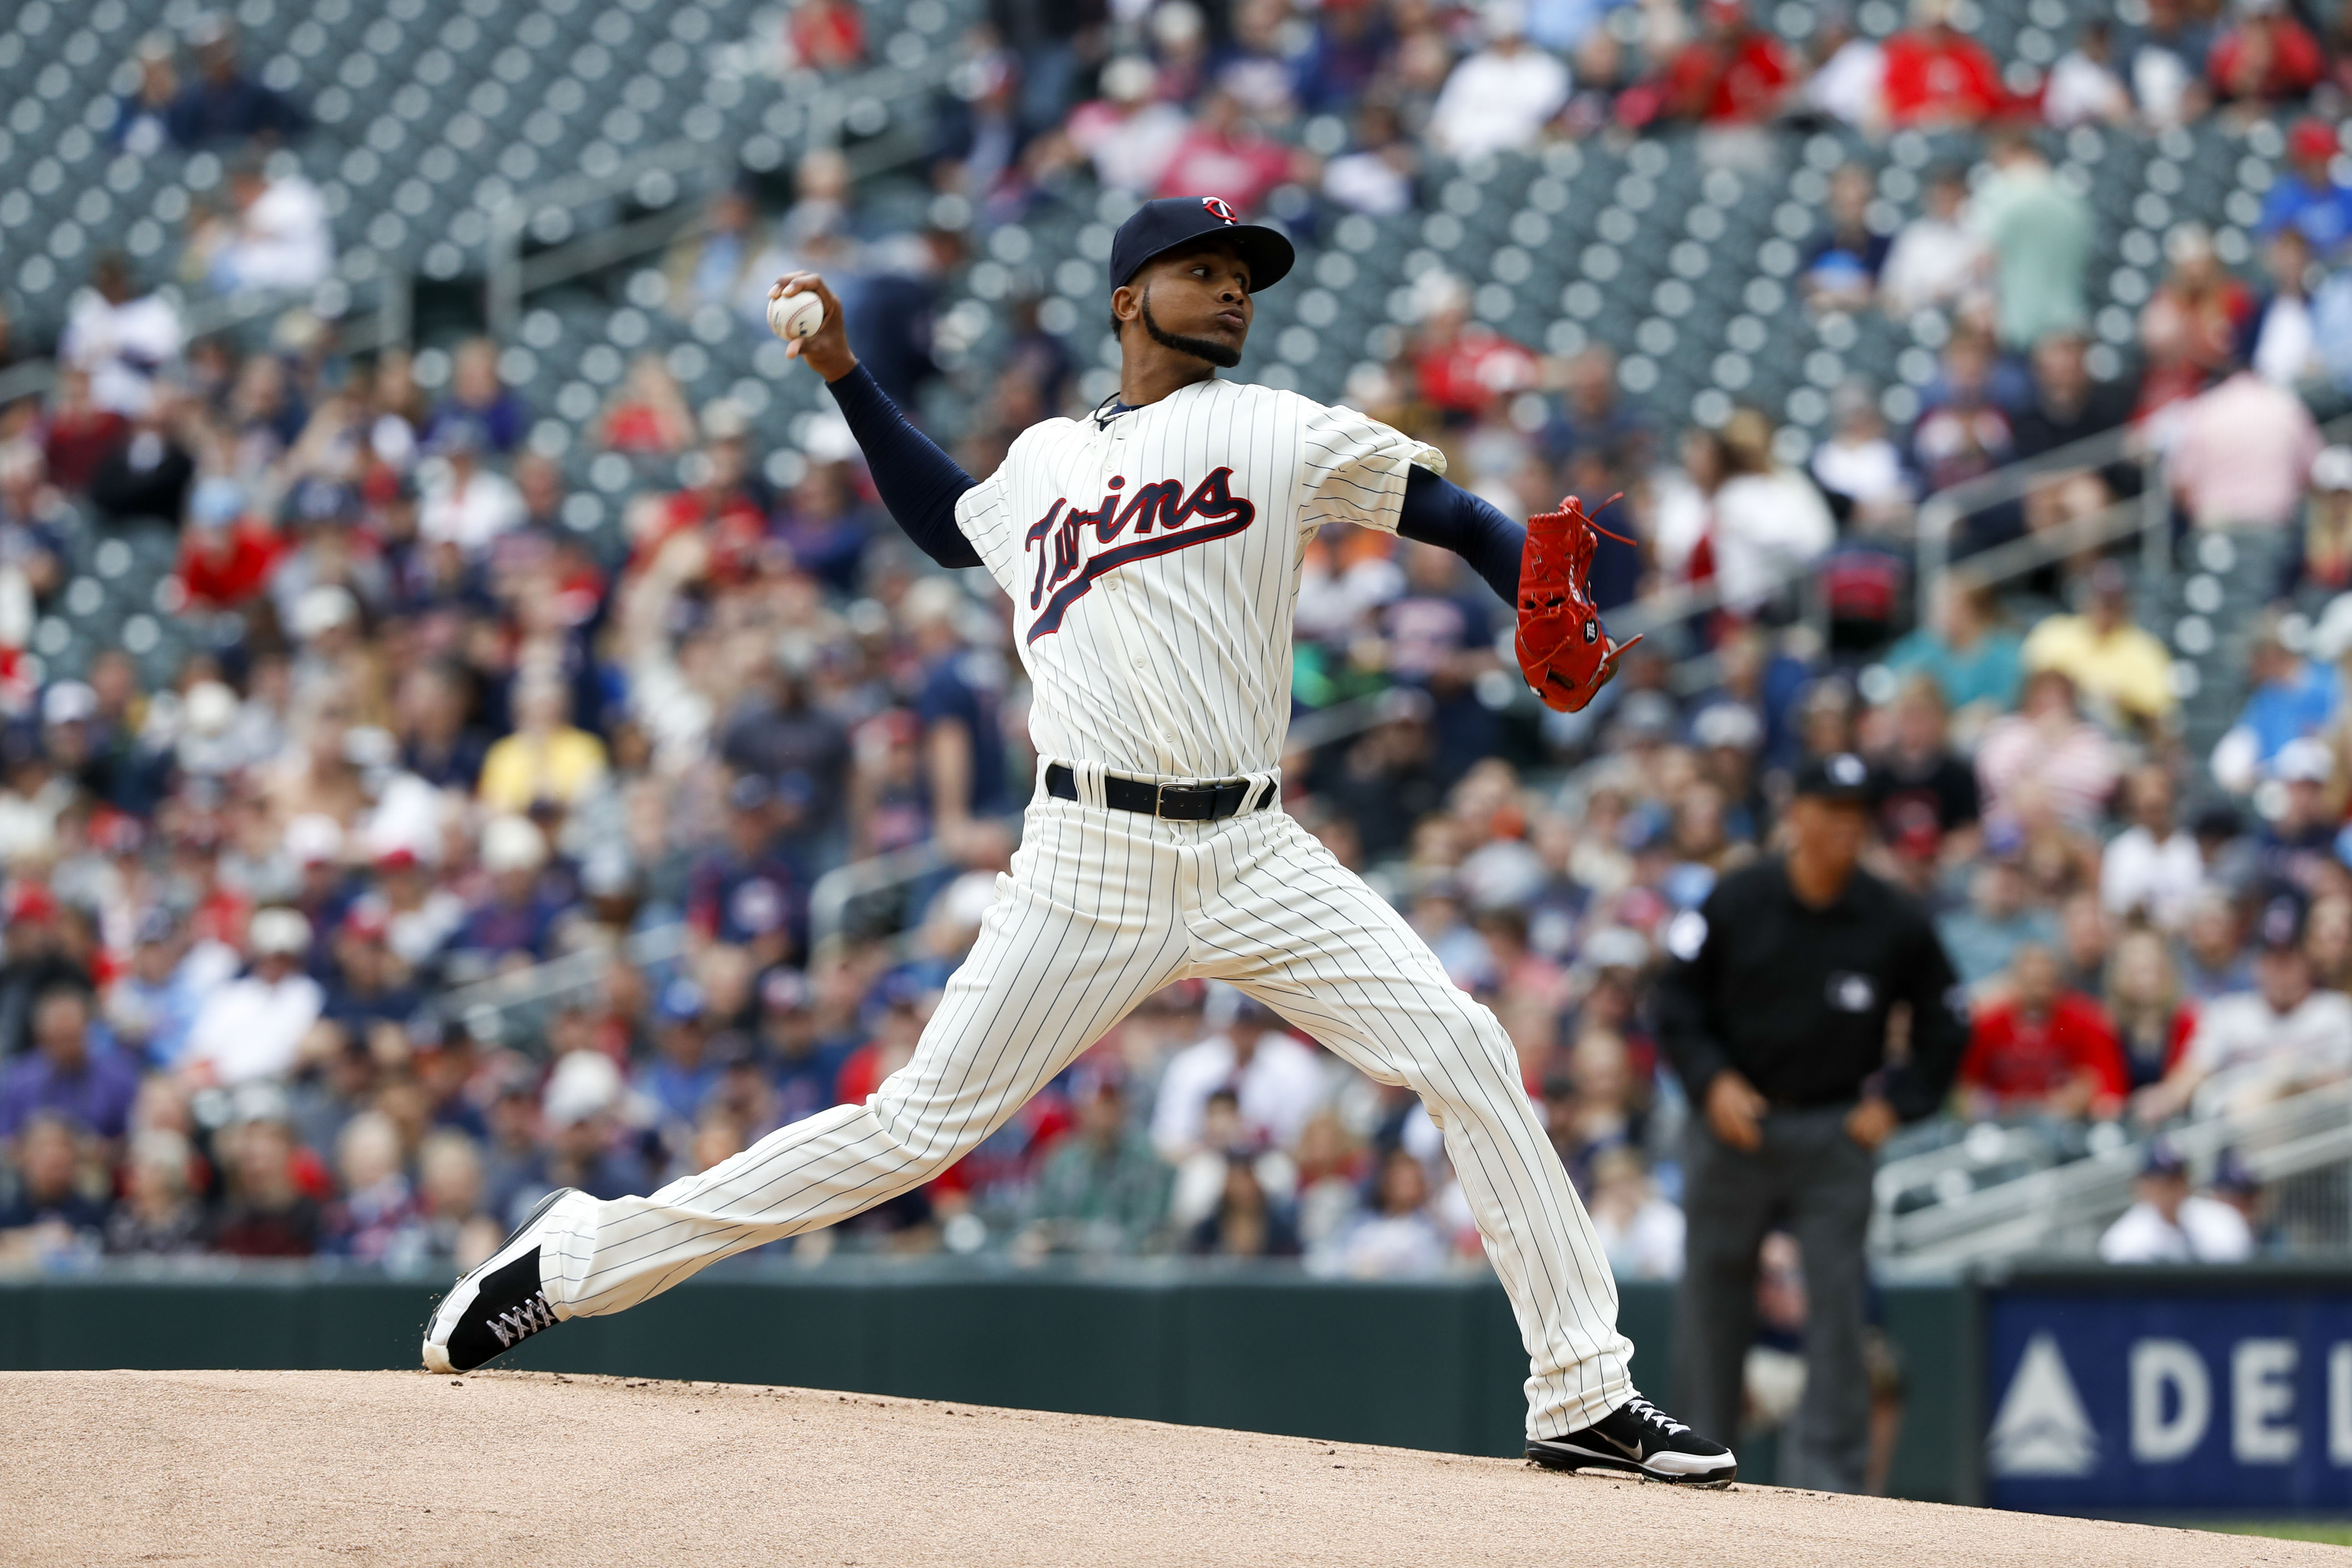 MLB: Santana targets June 1 in comeback bid with O's